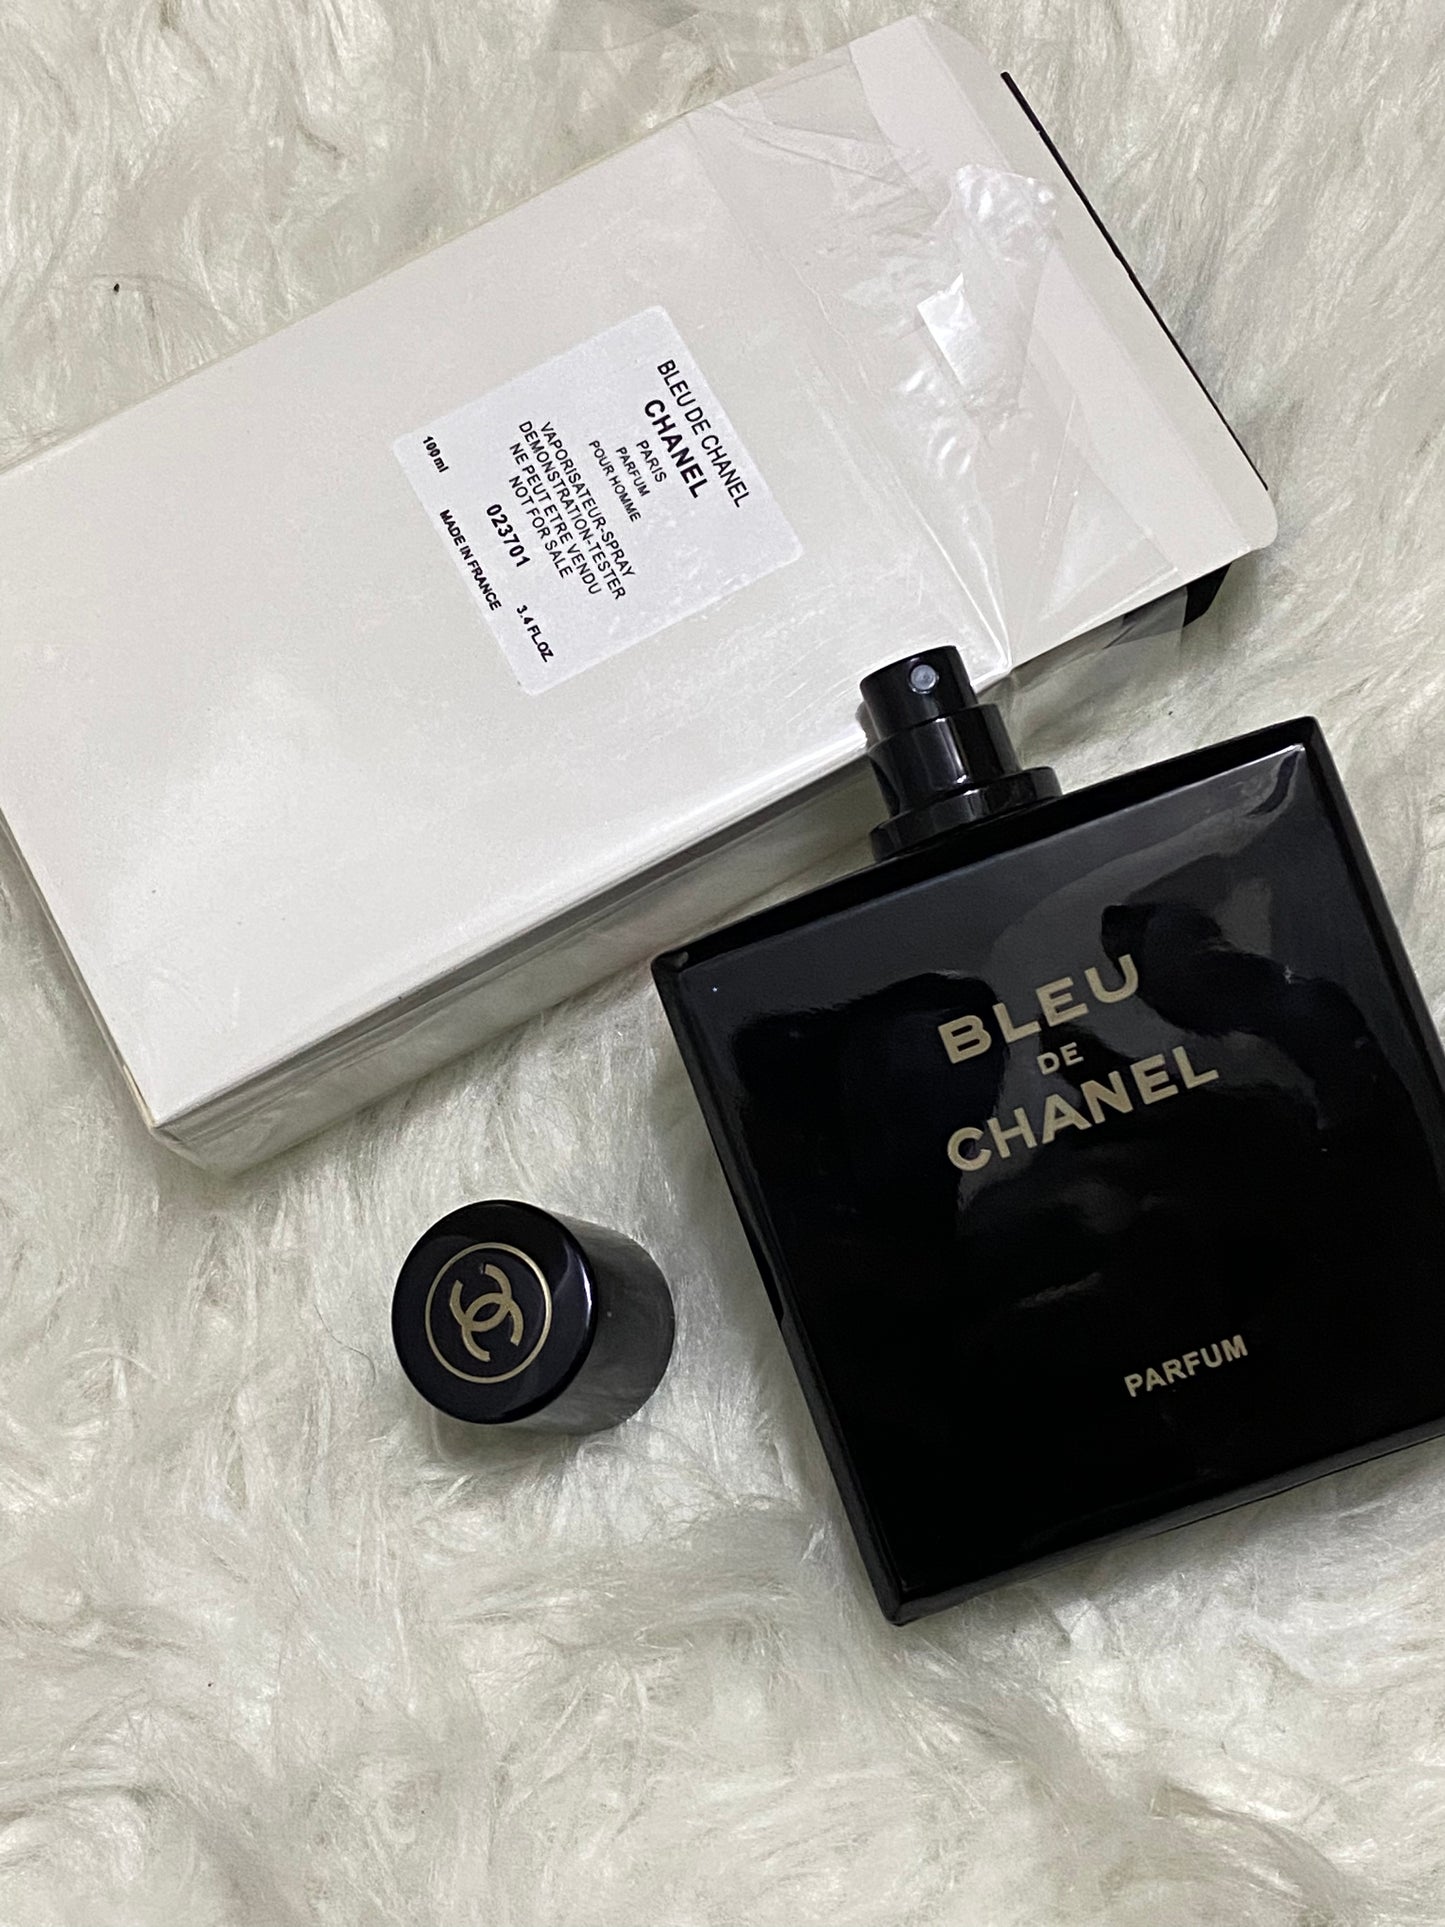 Chanel Bleu de Chanel Woda toaletowa – Tester •